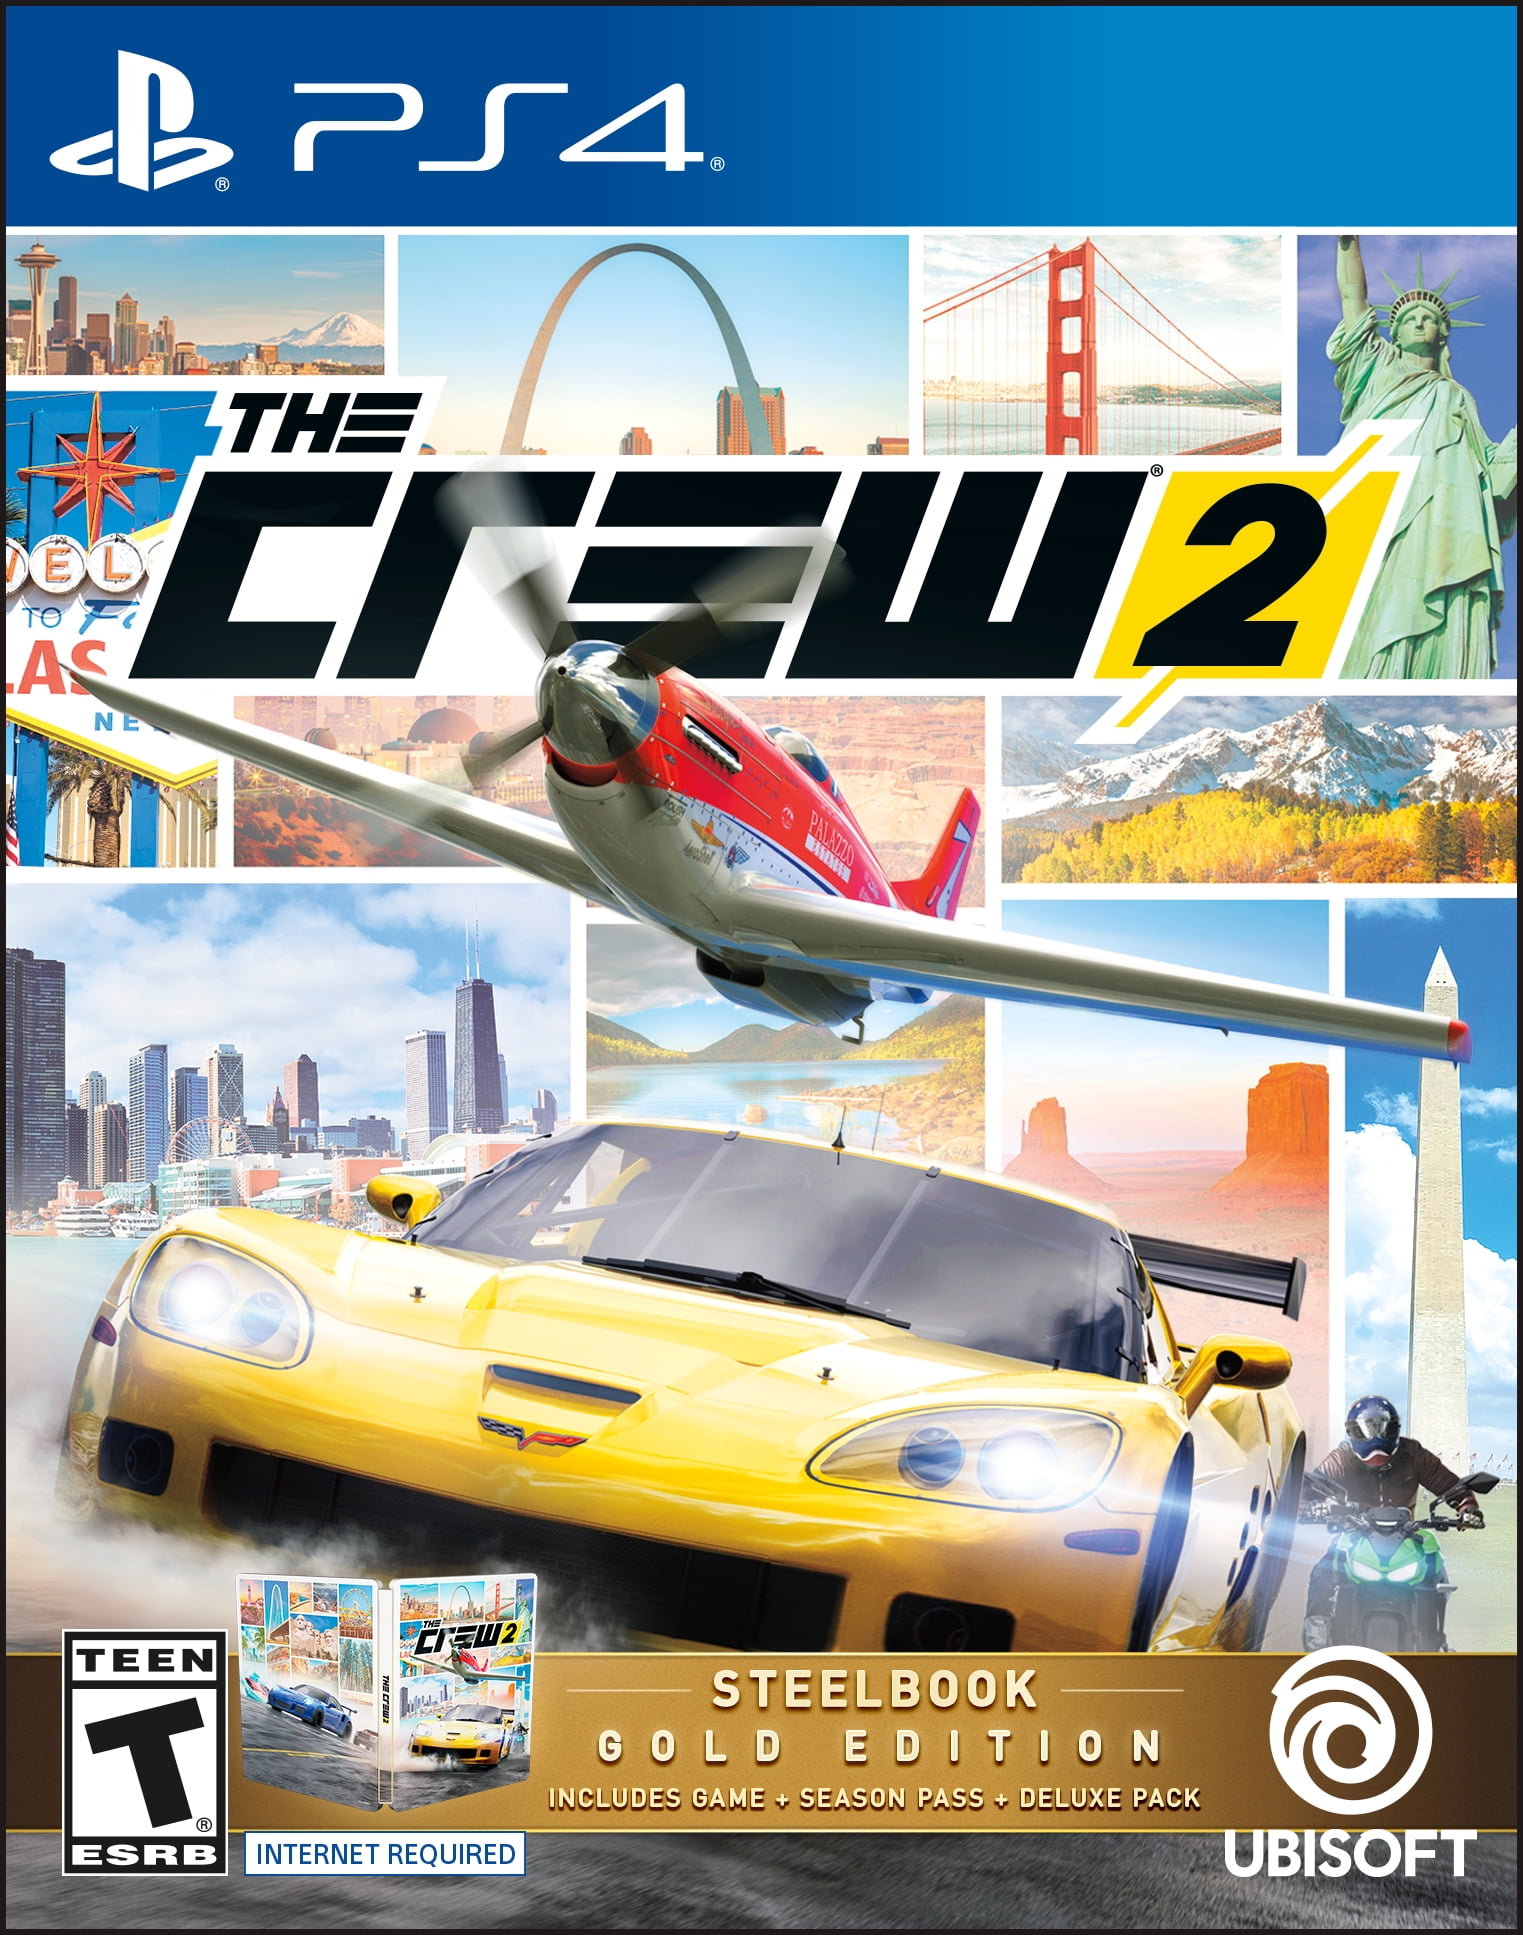 største kabine paritet The Crew 2 Steelbook Gold Edition, Ubisoft, PlayStation 4, 887256029173 -  Walmart.com